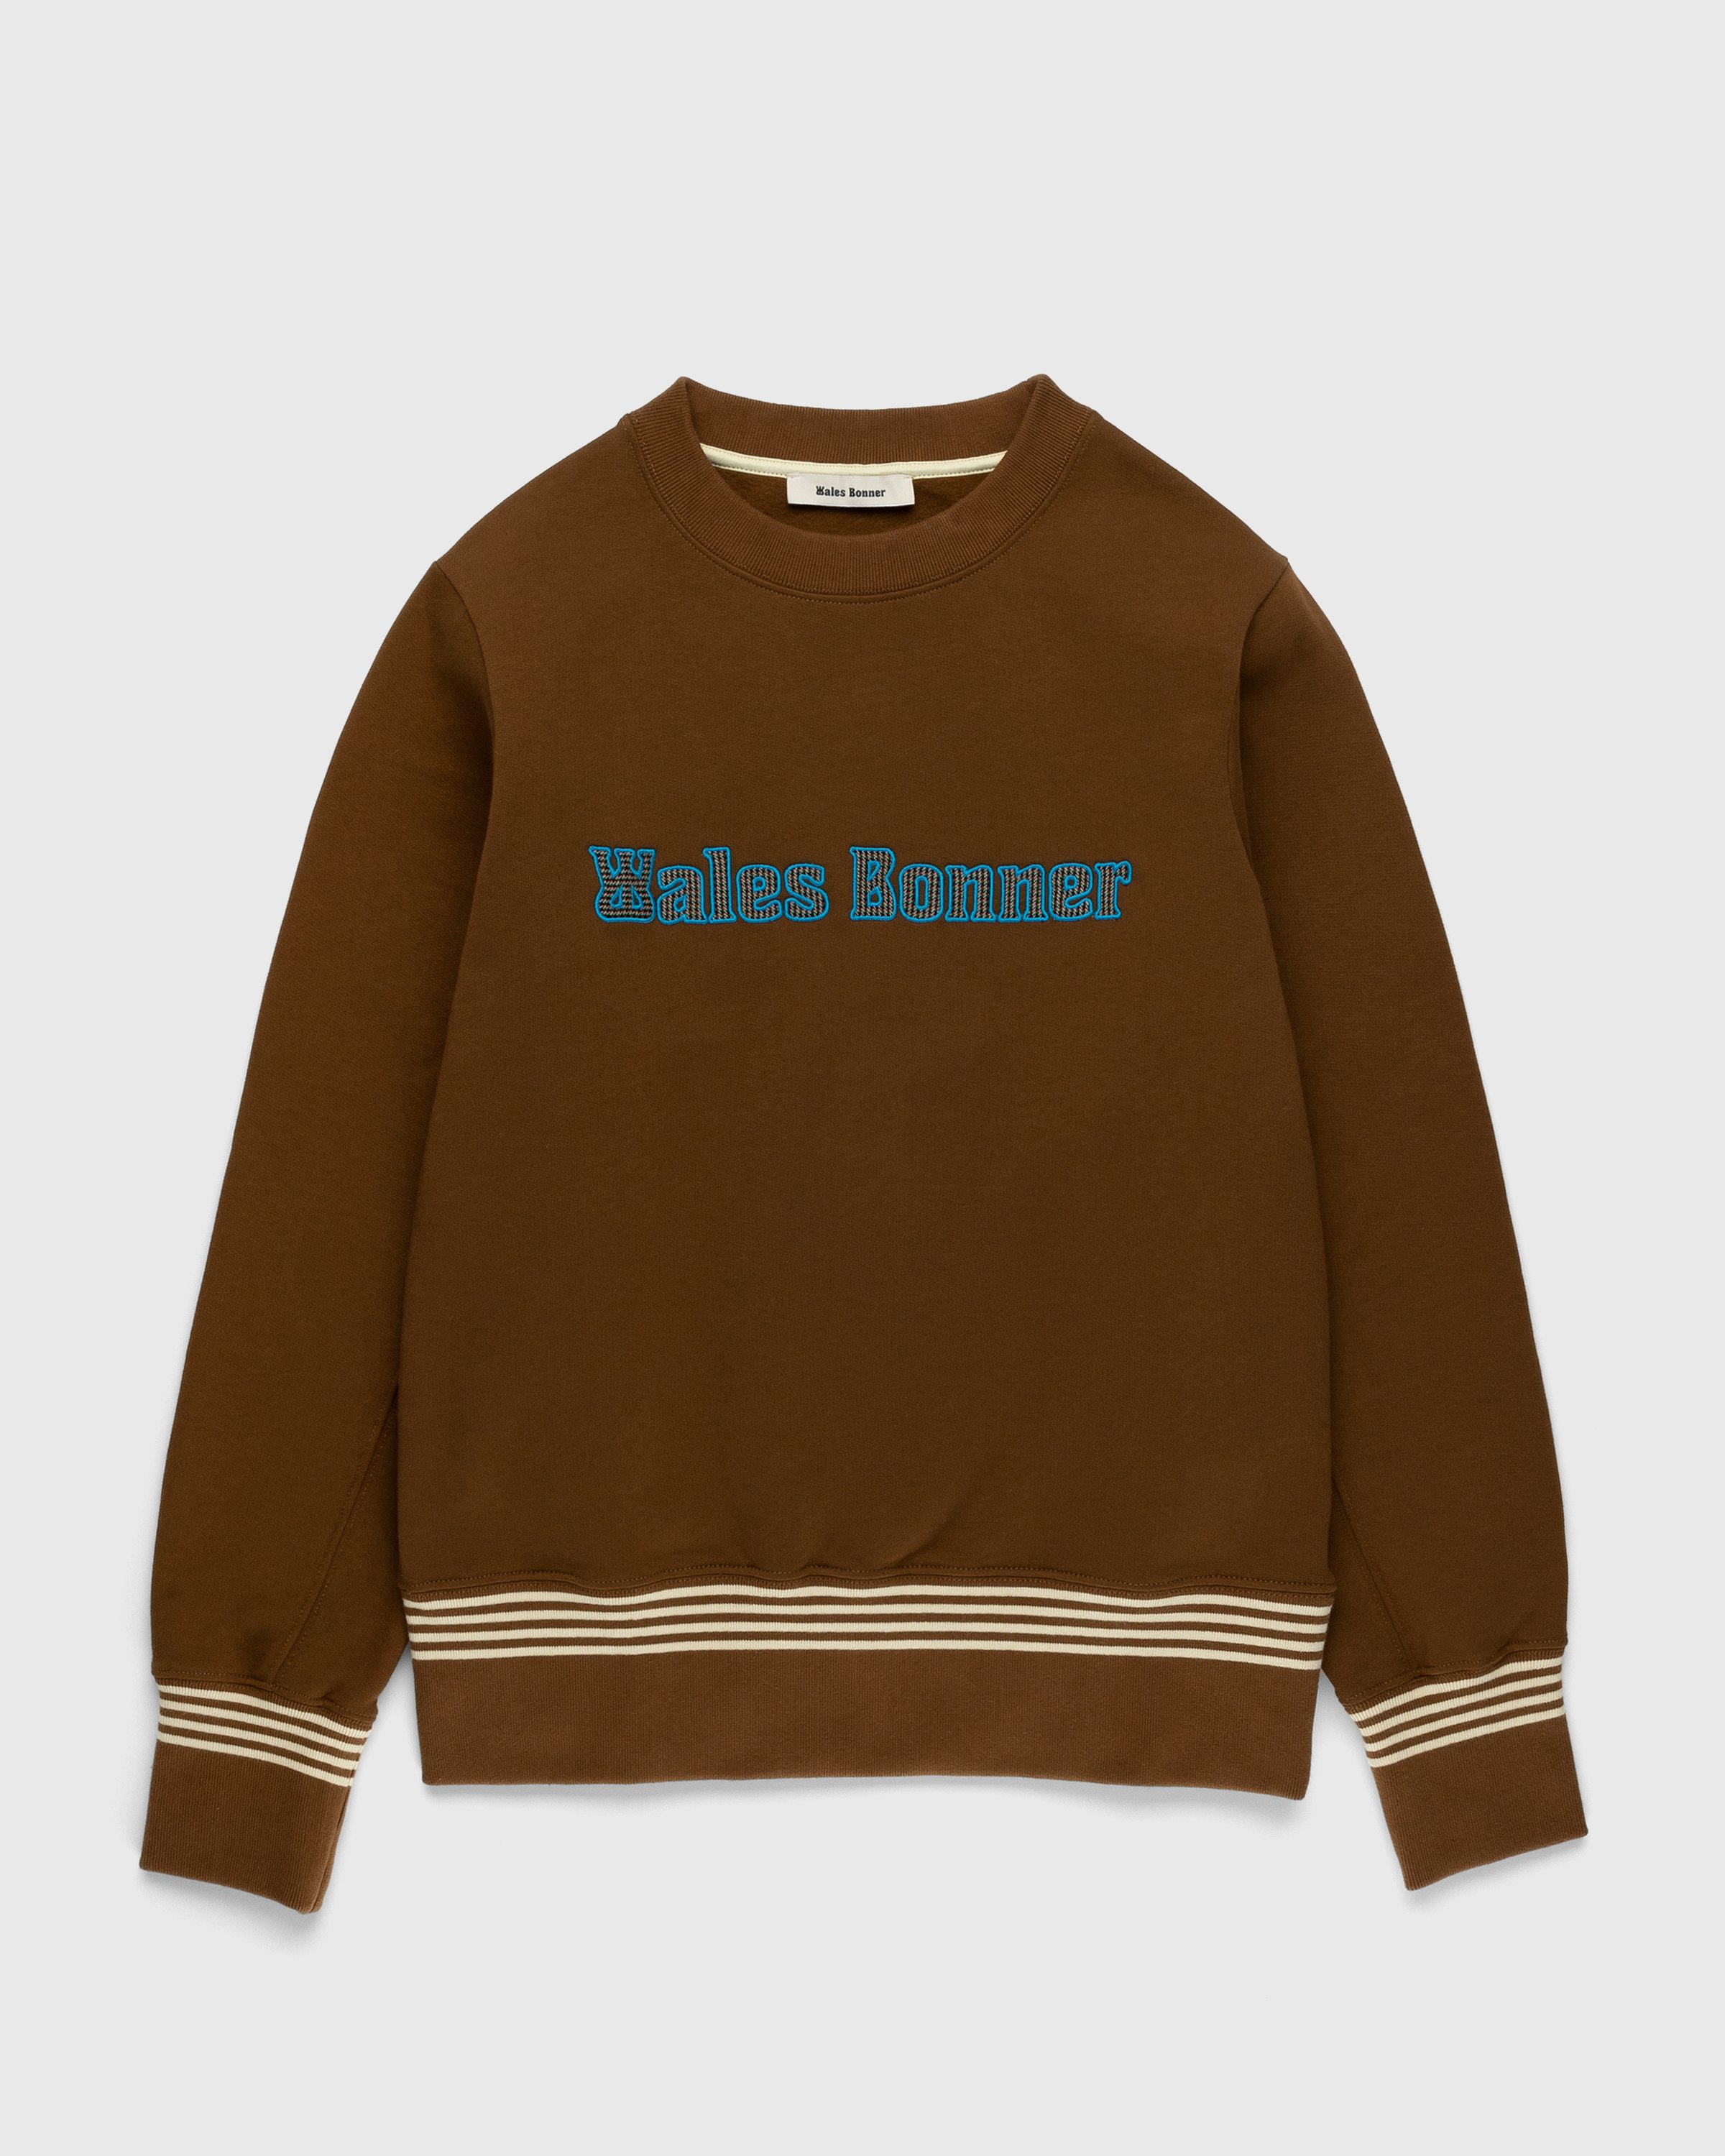 Wales Bonner - Original Sweatshirt Brown - Clothing - Brown - Image 1